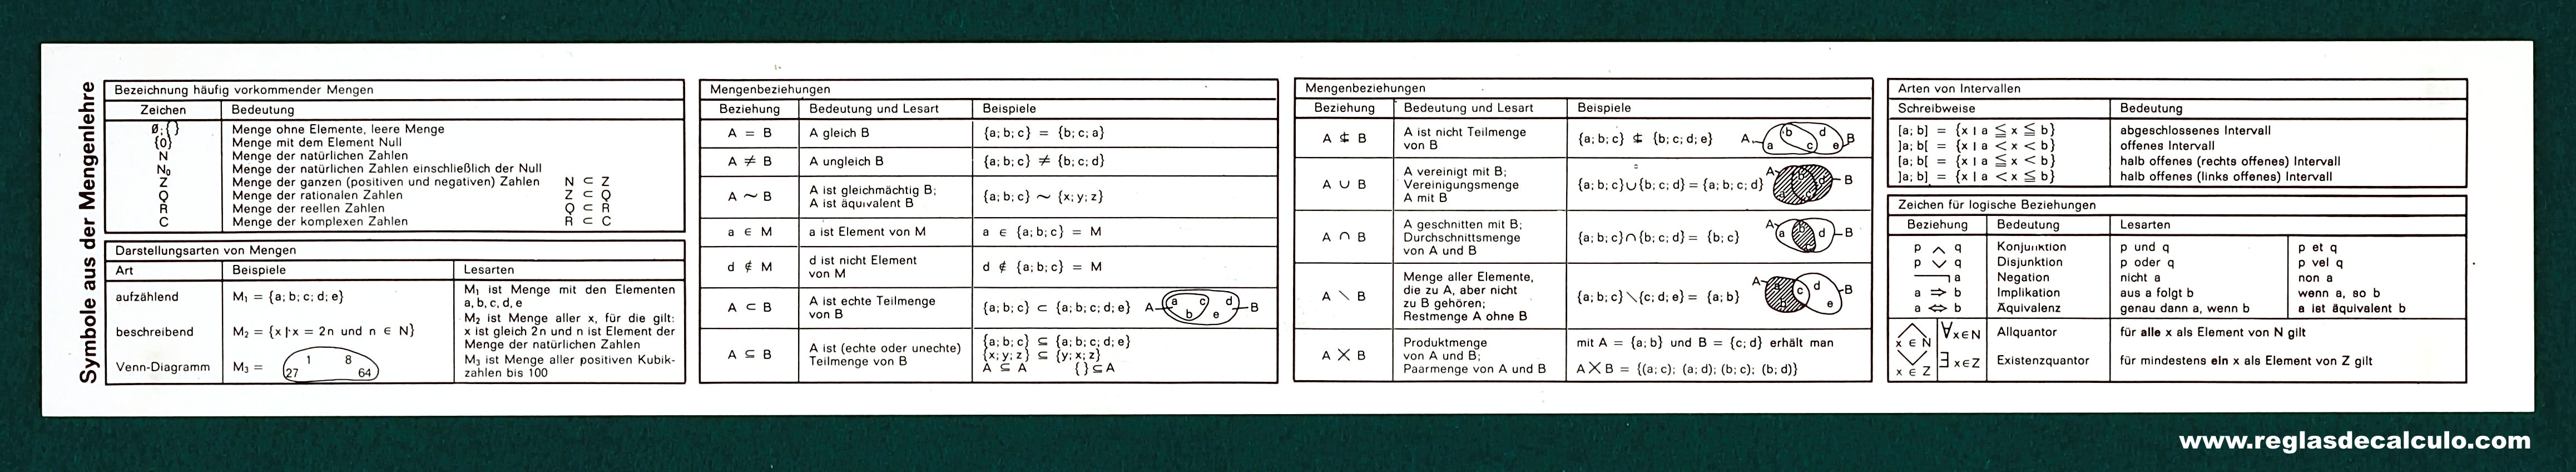 Faber Castell 2/82N Regla de Calculo Slide rule